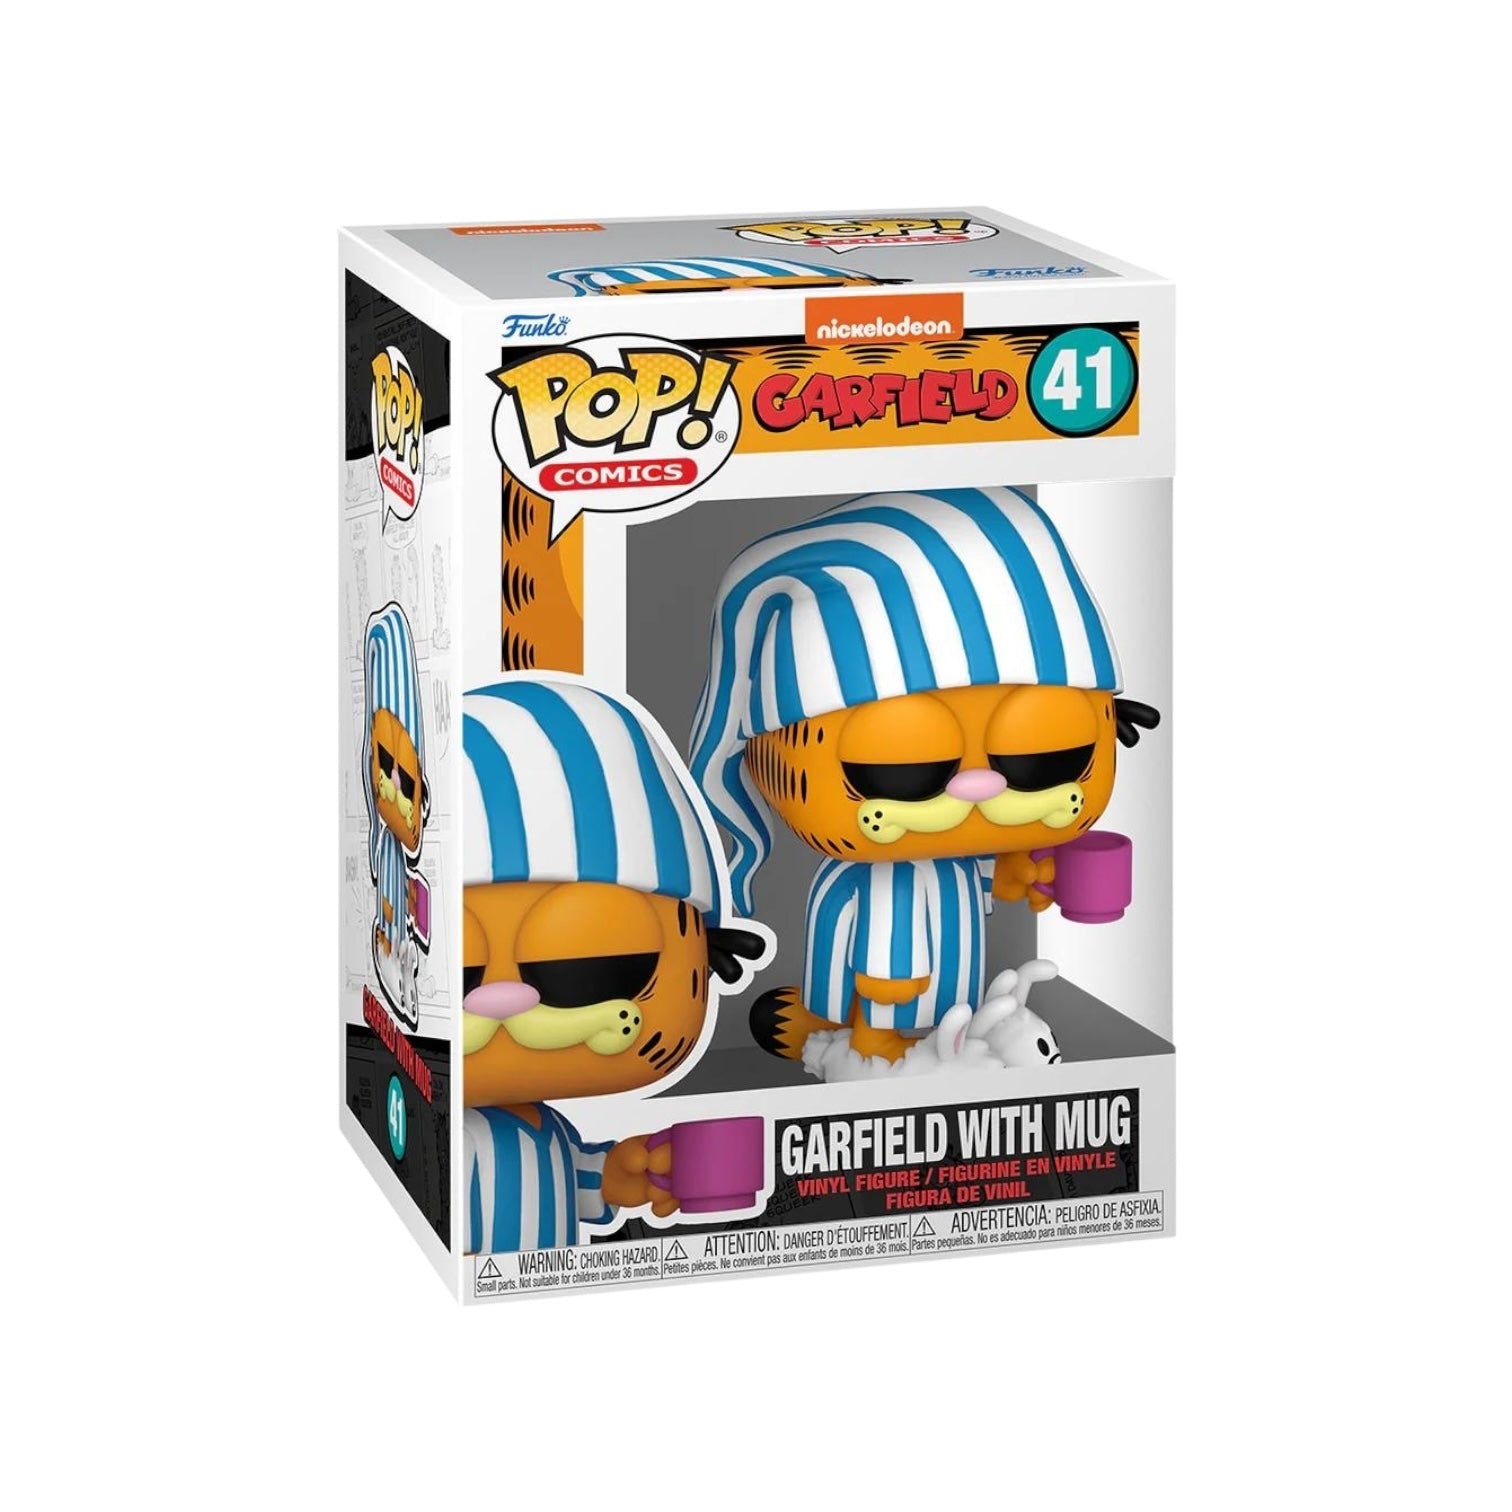 Garfield with Mug #41 Funko Pop! - Garfield - PREORDER